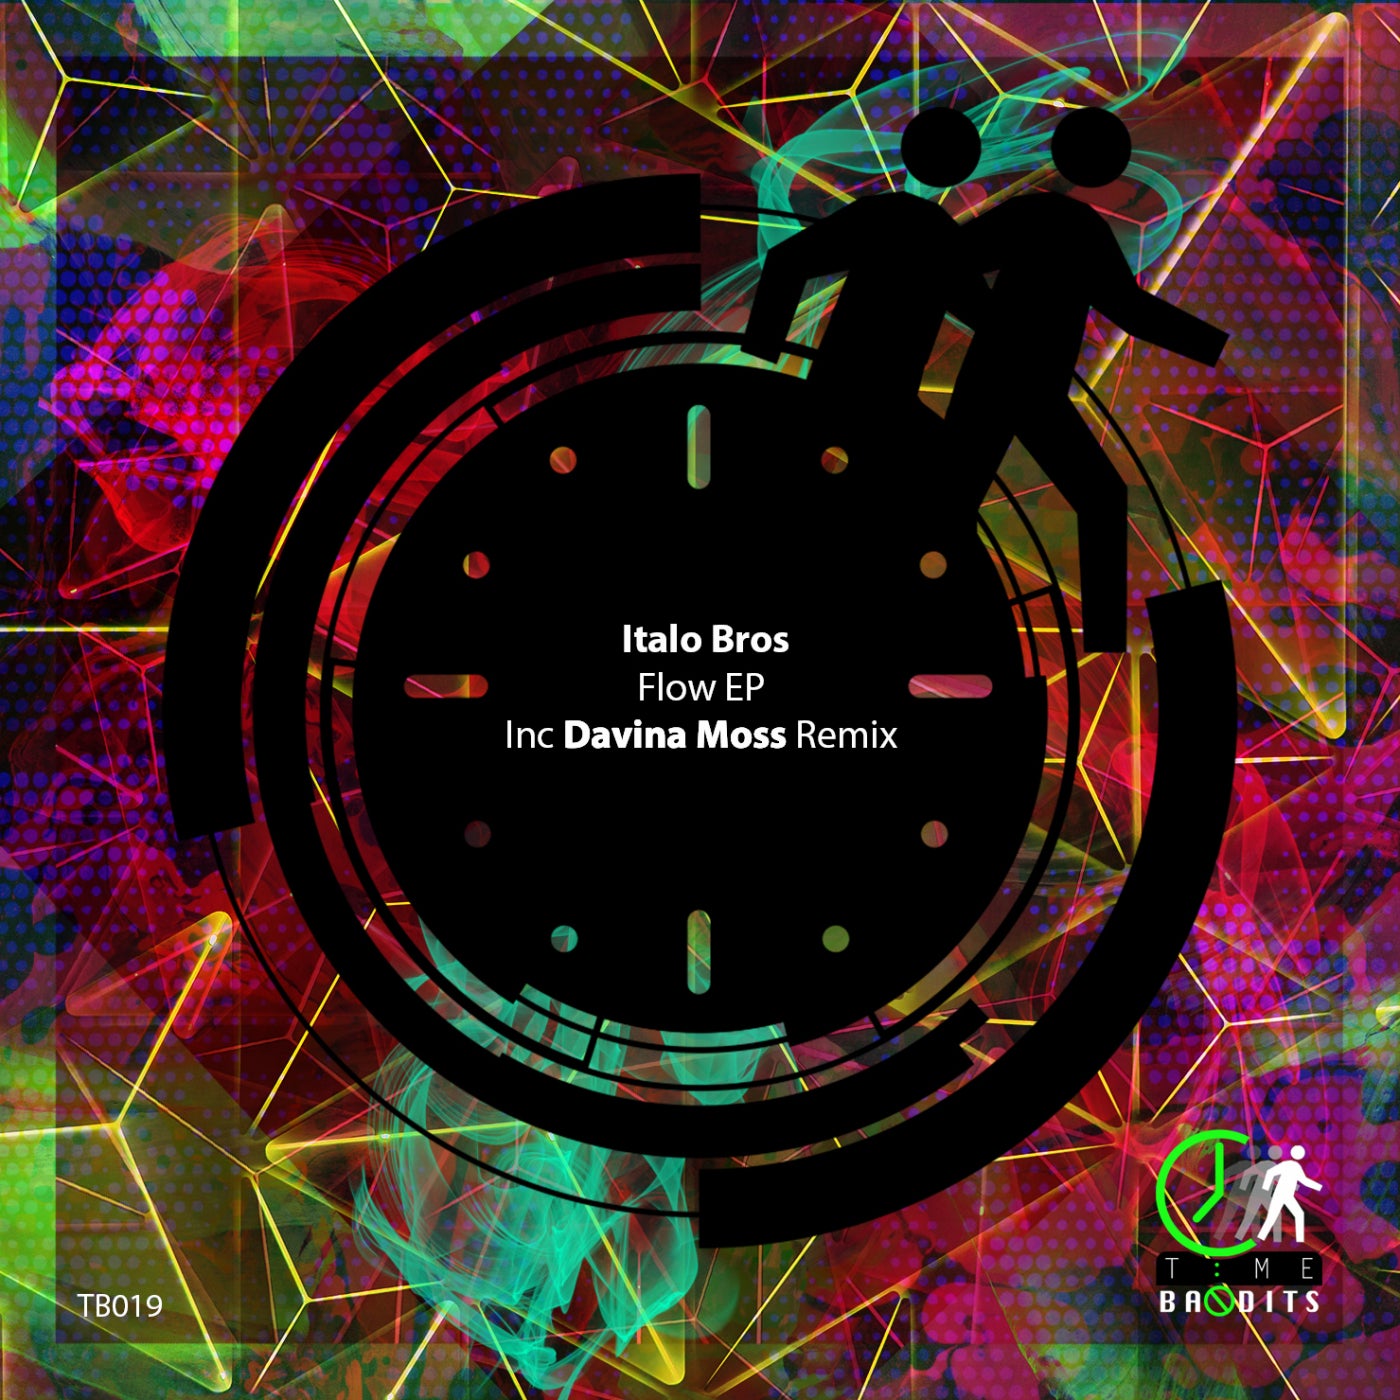 image cover: Italobros - Flow EP / Time Bandits